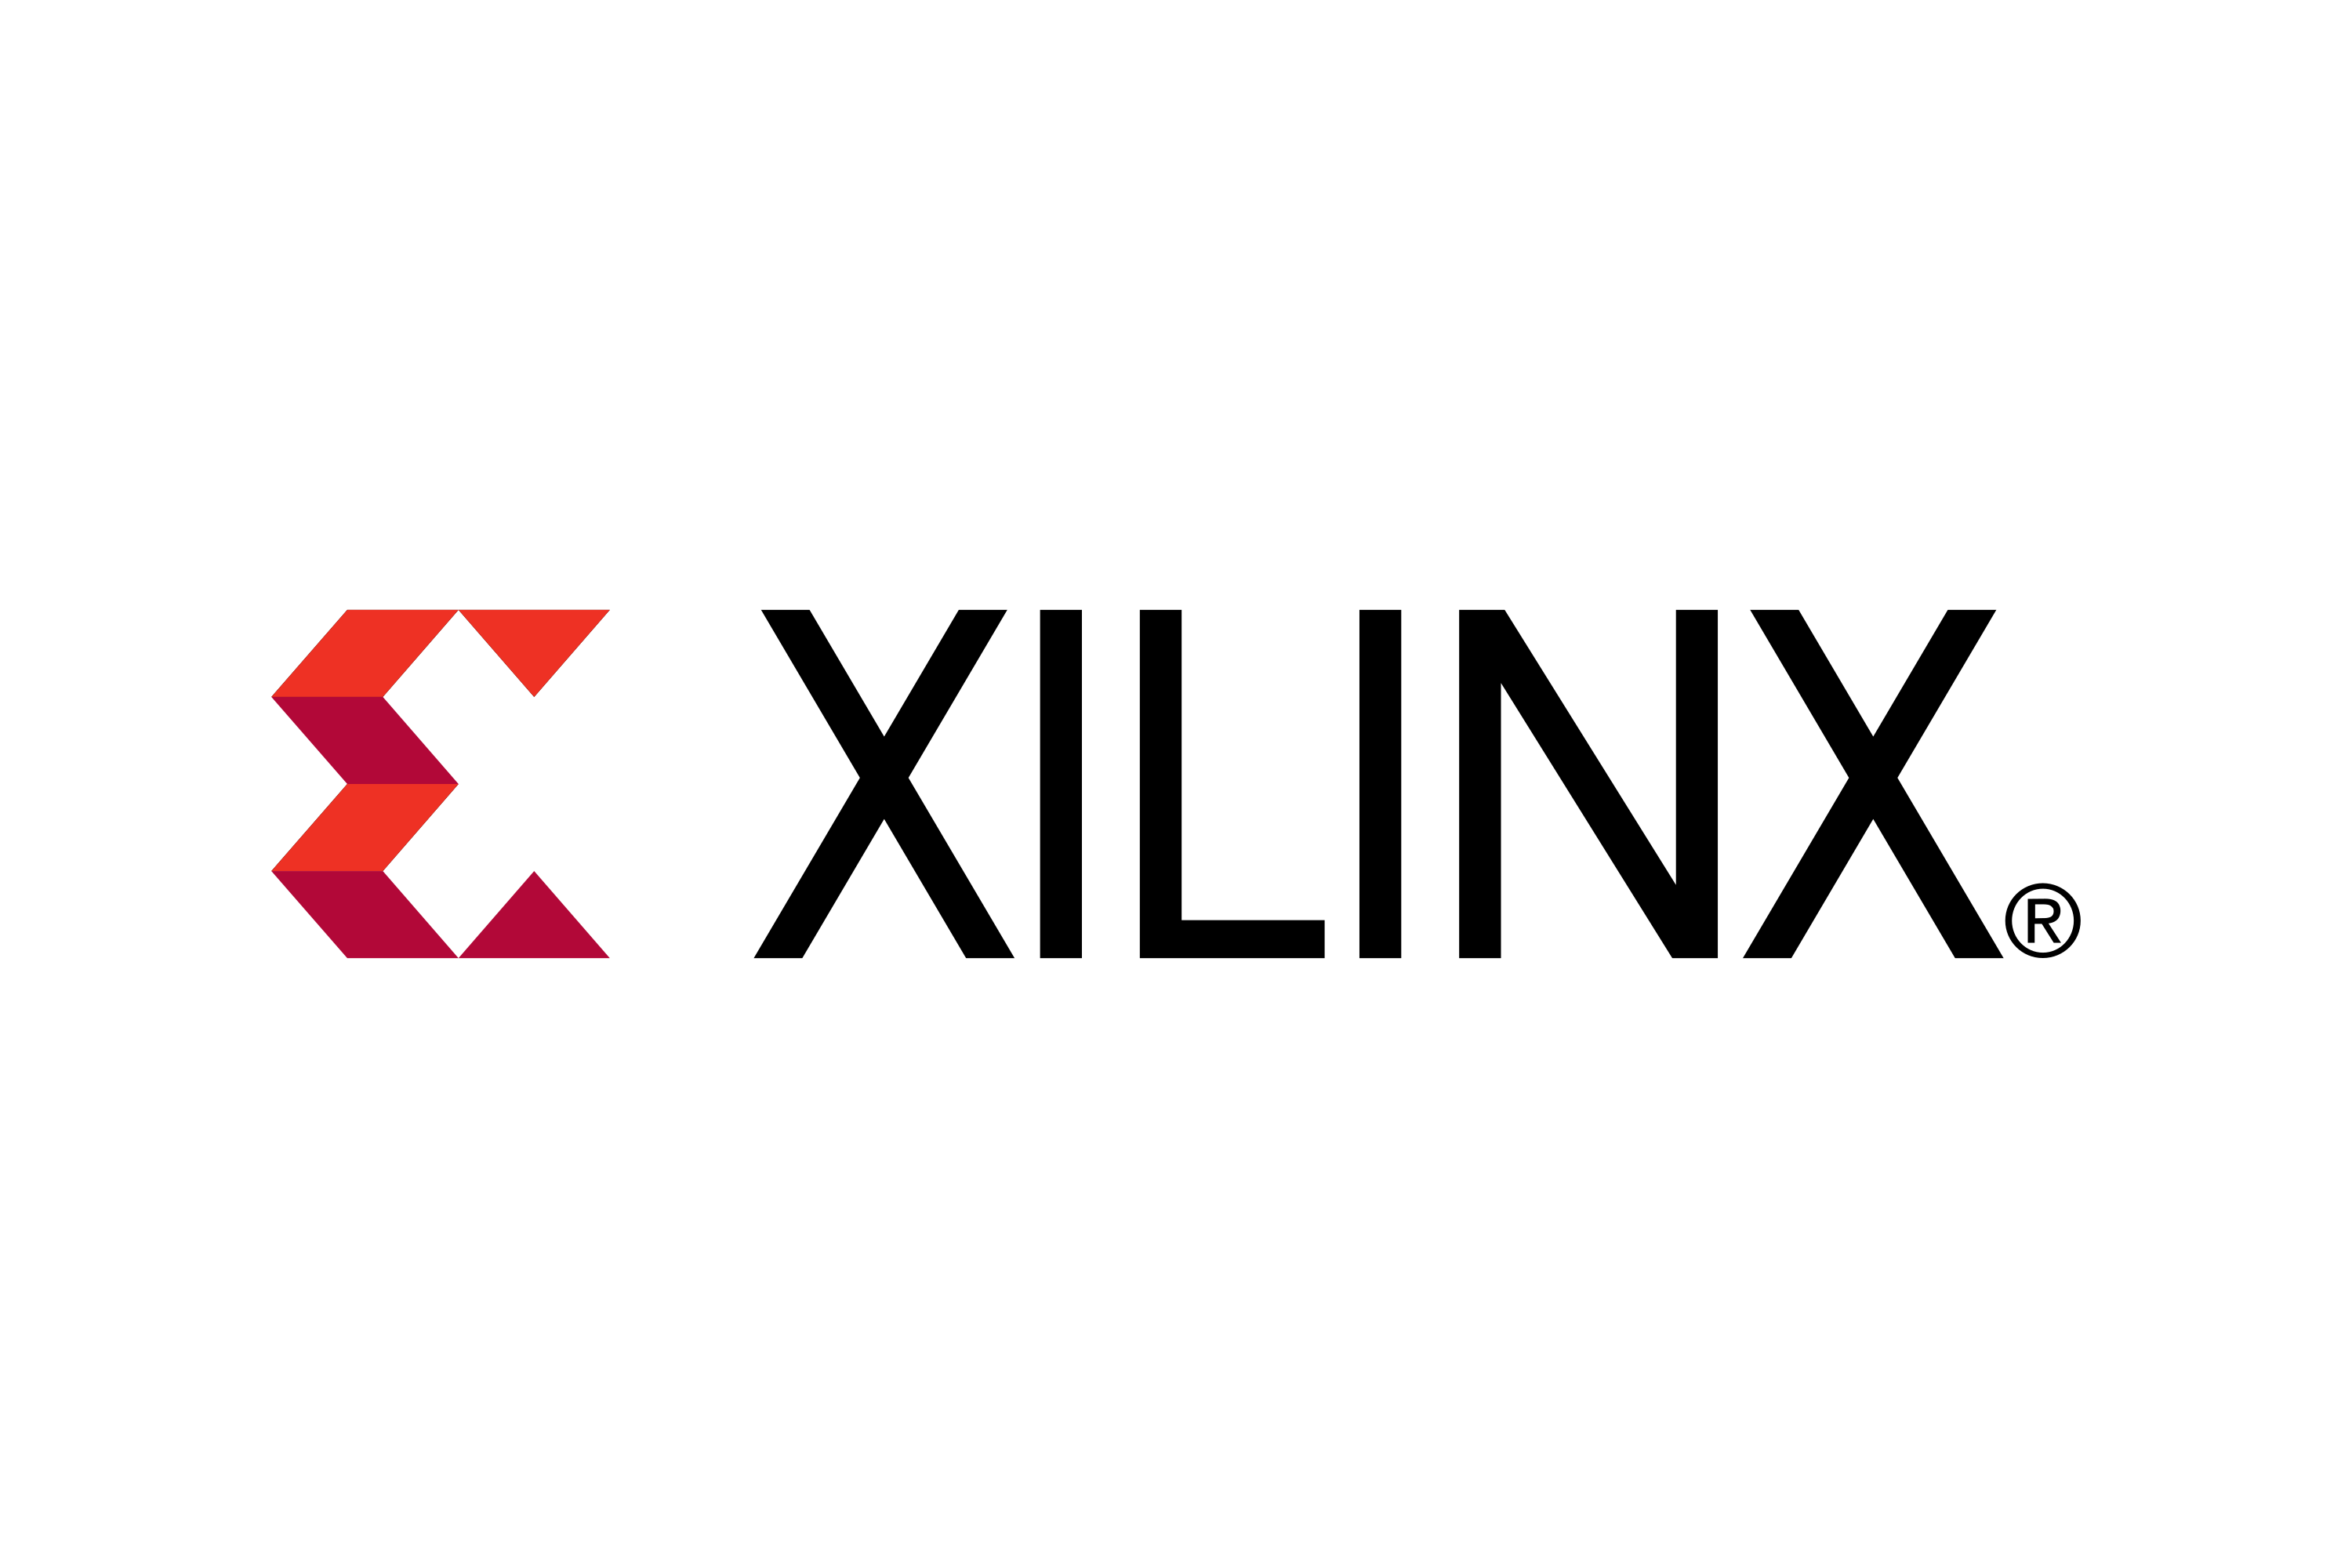 Xilinx Logo